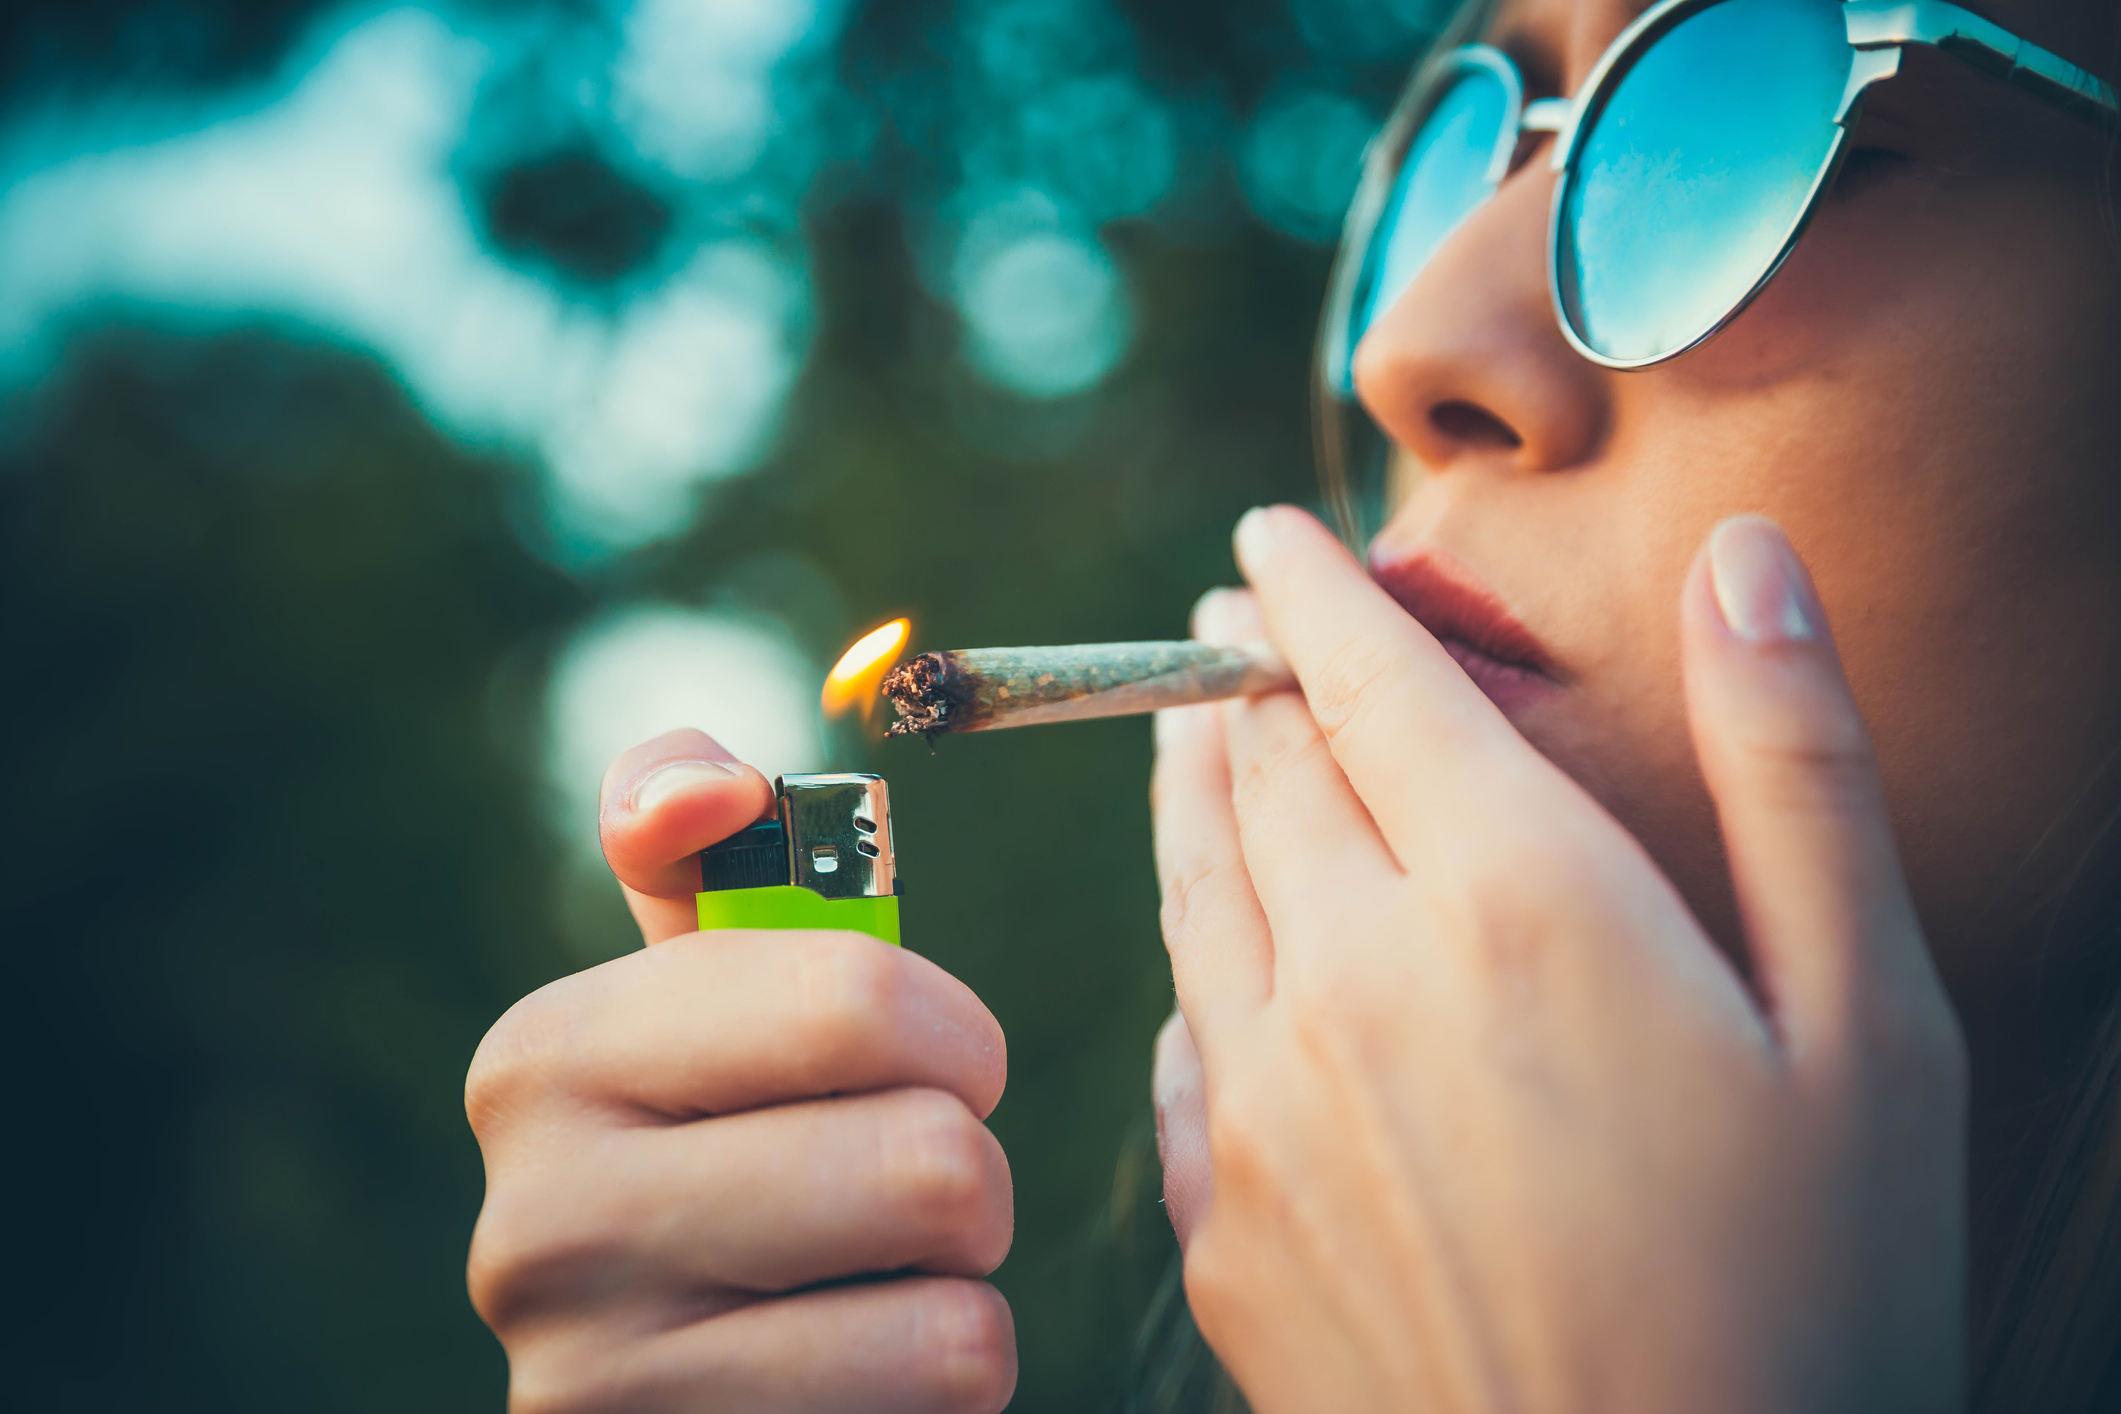 Young woman wearing sunglasses shown in profile lighting up a marijuana cigarette 